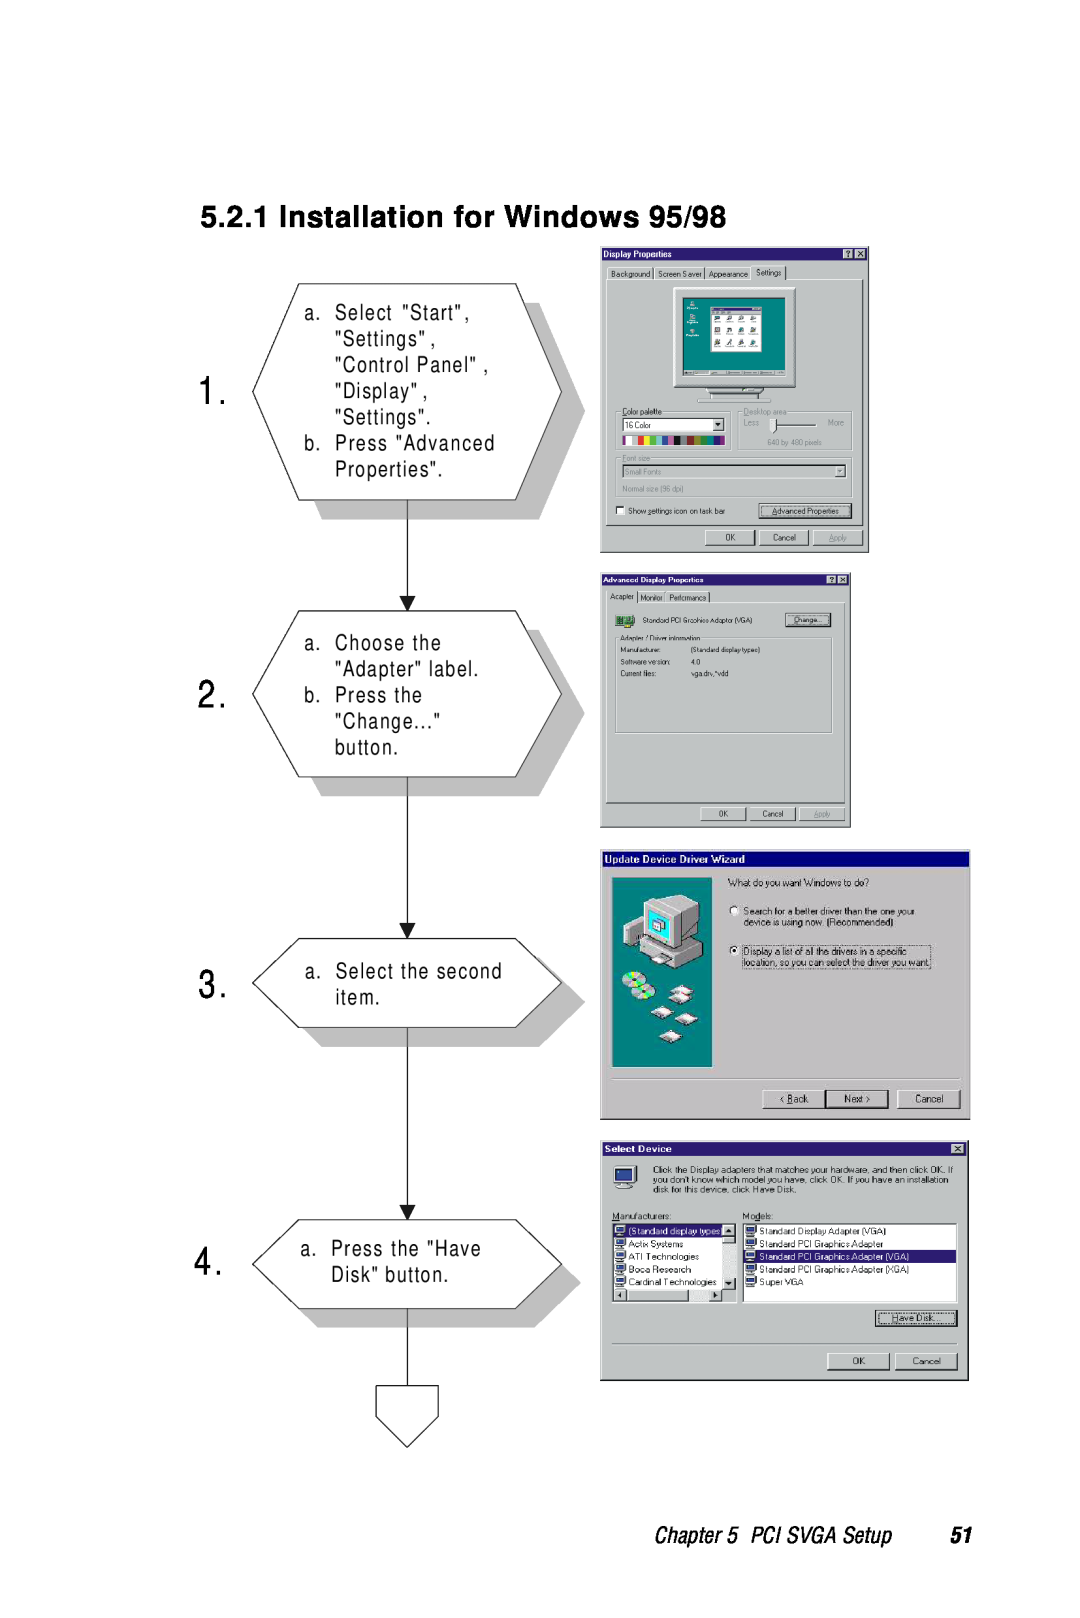 Advantech 2006957006 5th Edition user manual Installation for Windows 95/98, b. Press Advanced Properties, PCI SVGA Setup 